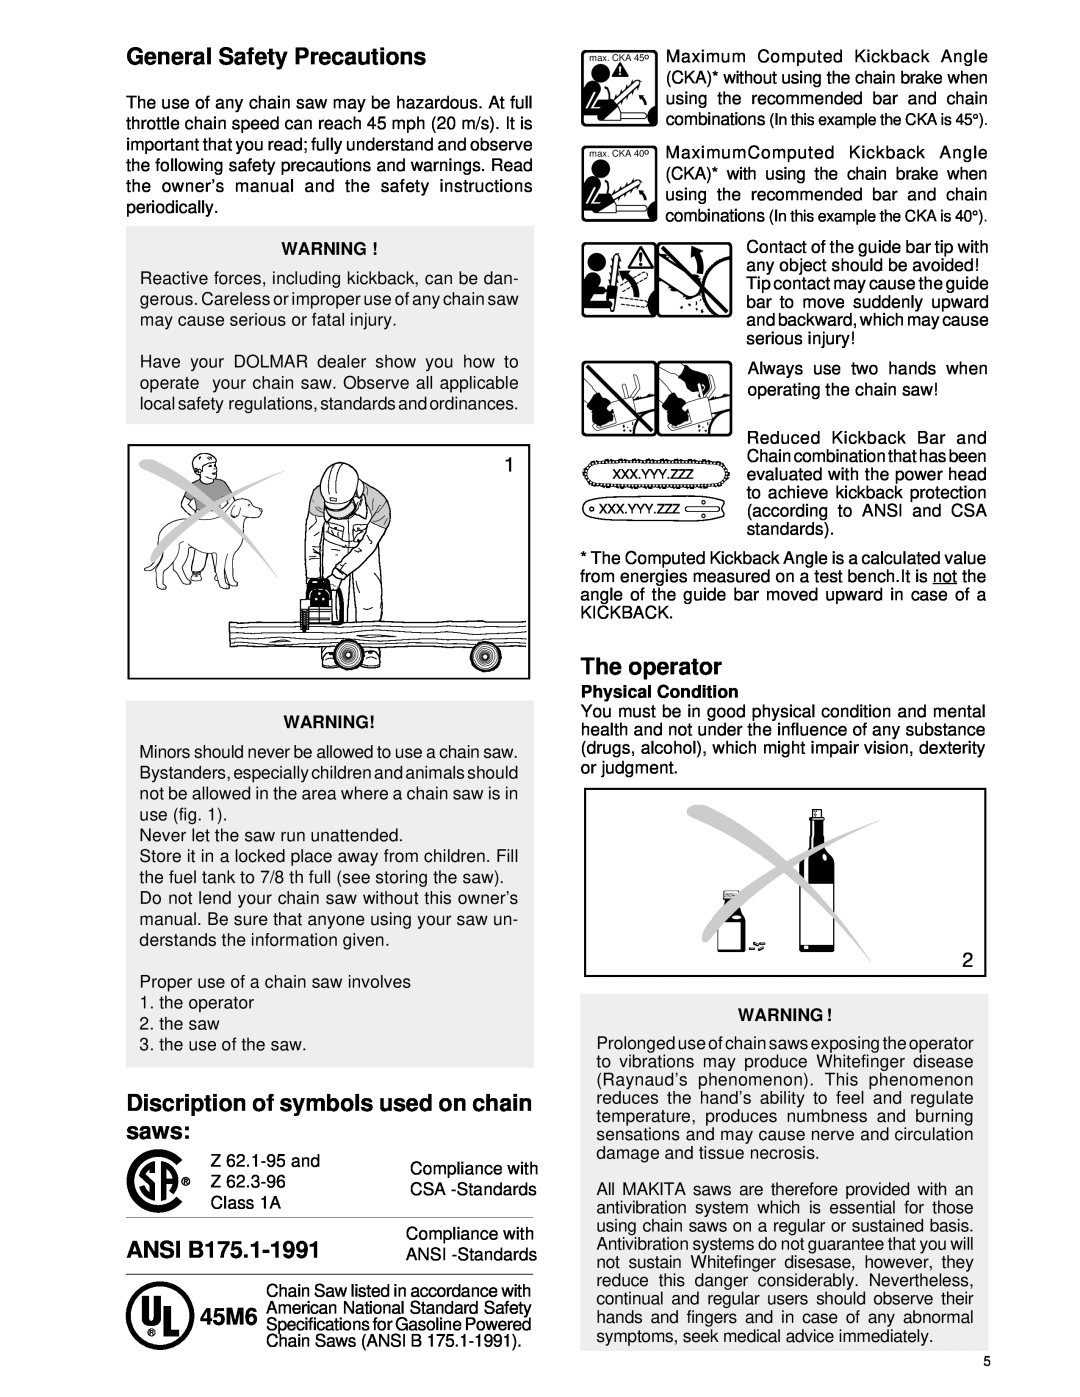 Dolmar Chain Saw manual General Safety Precautions, Discription of symbols used on chain saws, ANSI B175.1-1991, 45M6 